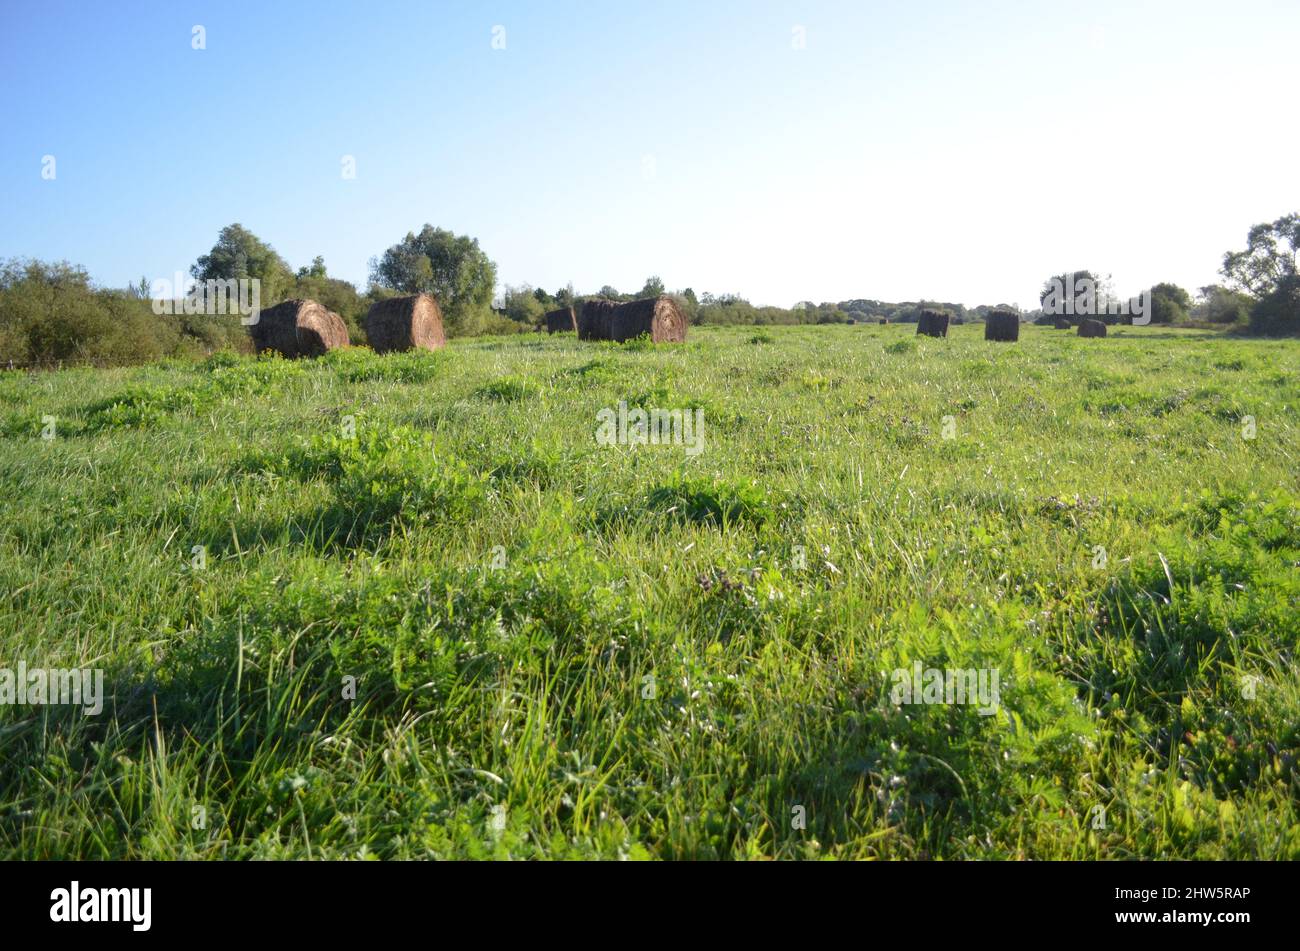 Heuballen auf der Wiese ; haybales on meadow Stock Photo